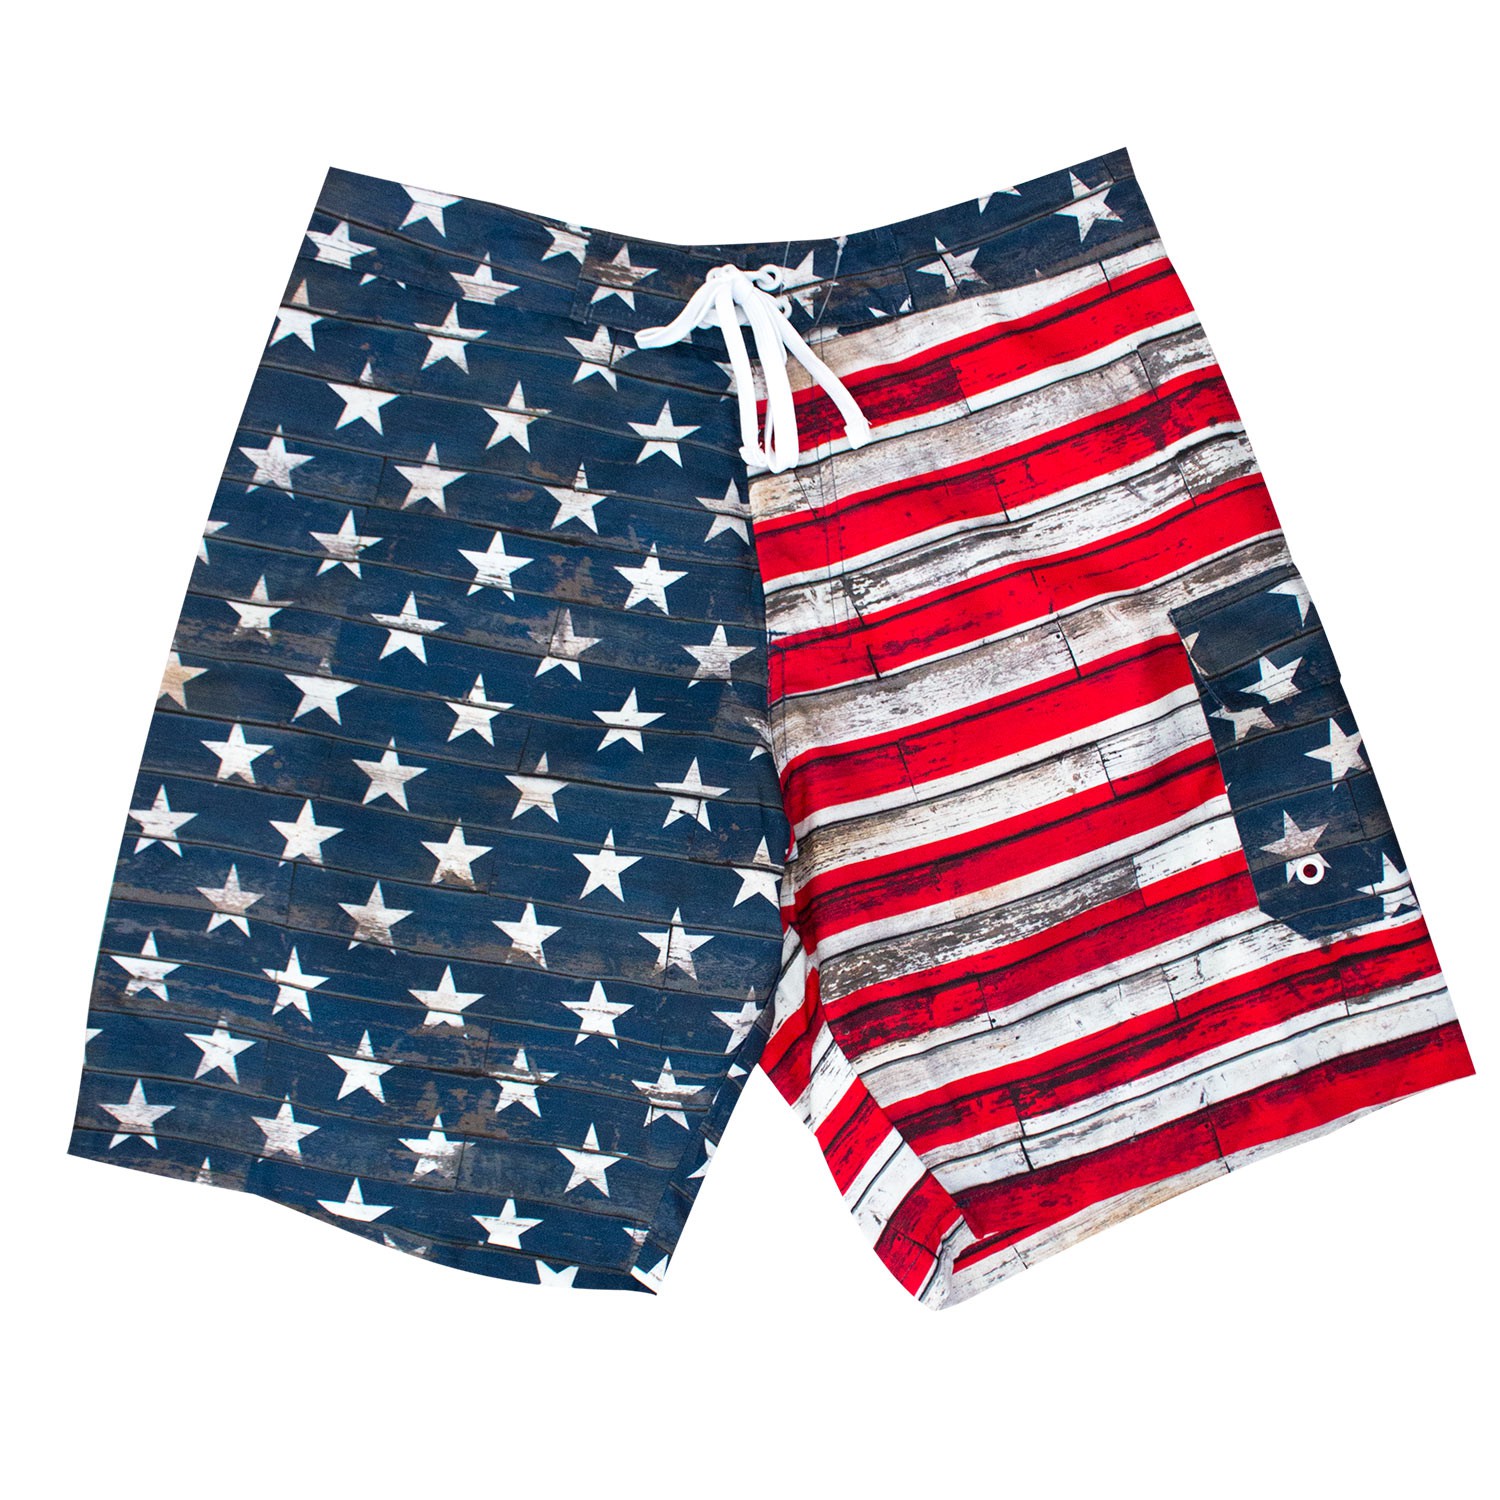 USA Men's Patriotic Faded American Flag Board Shorts